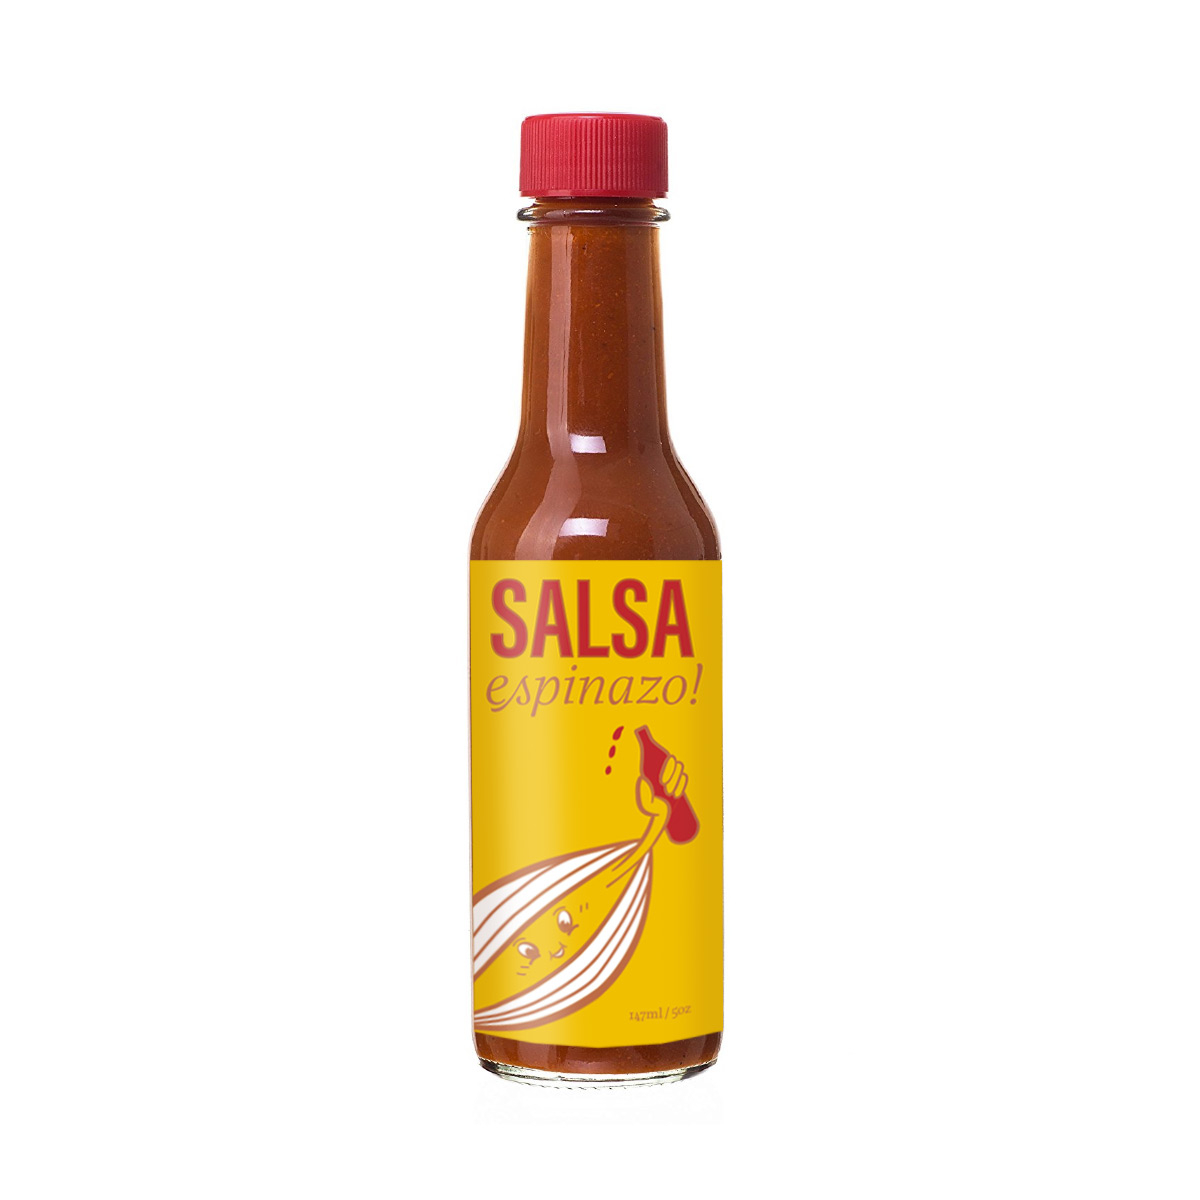 bar vinazo hot sauce packaging label design